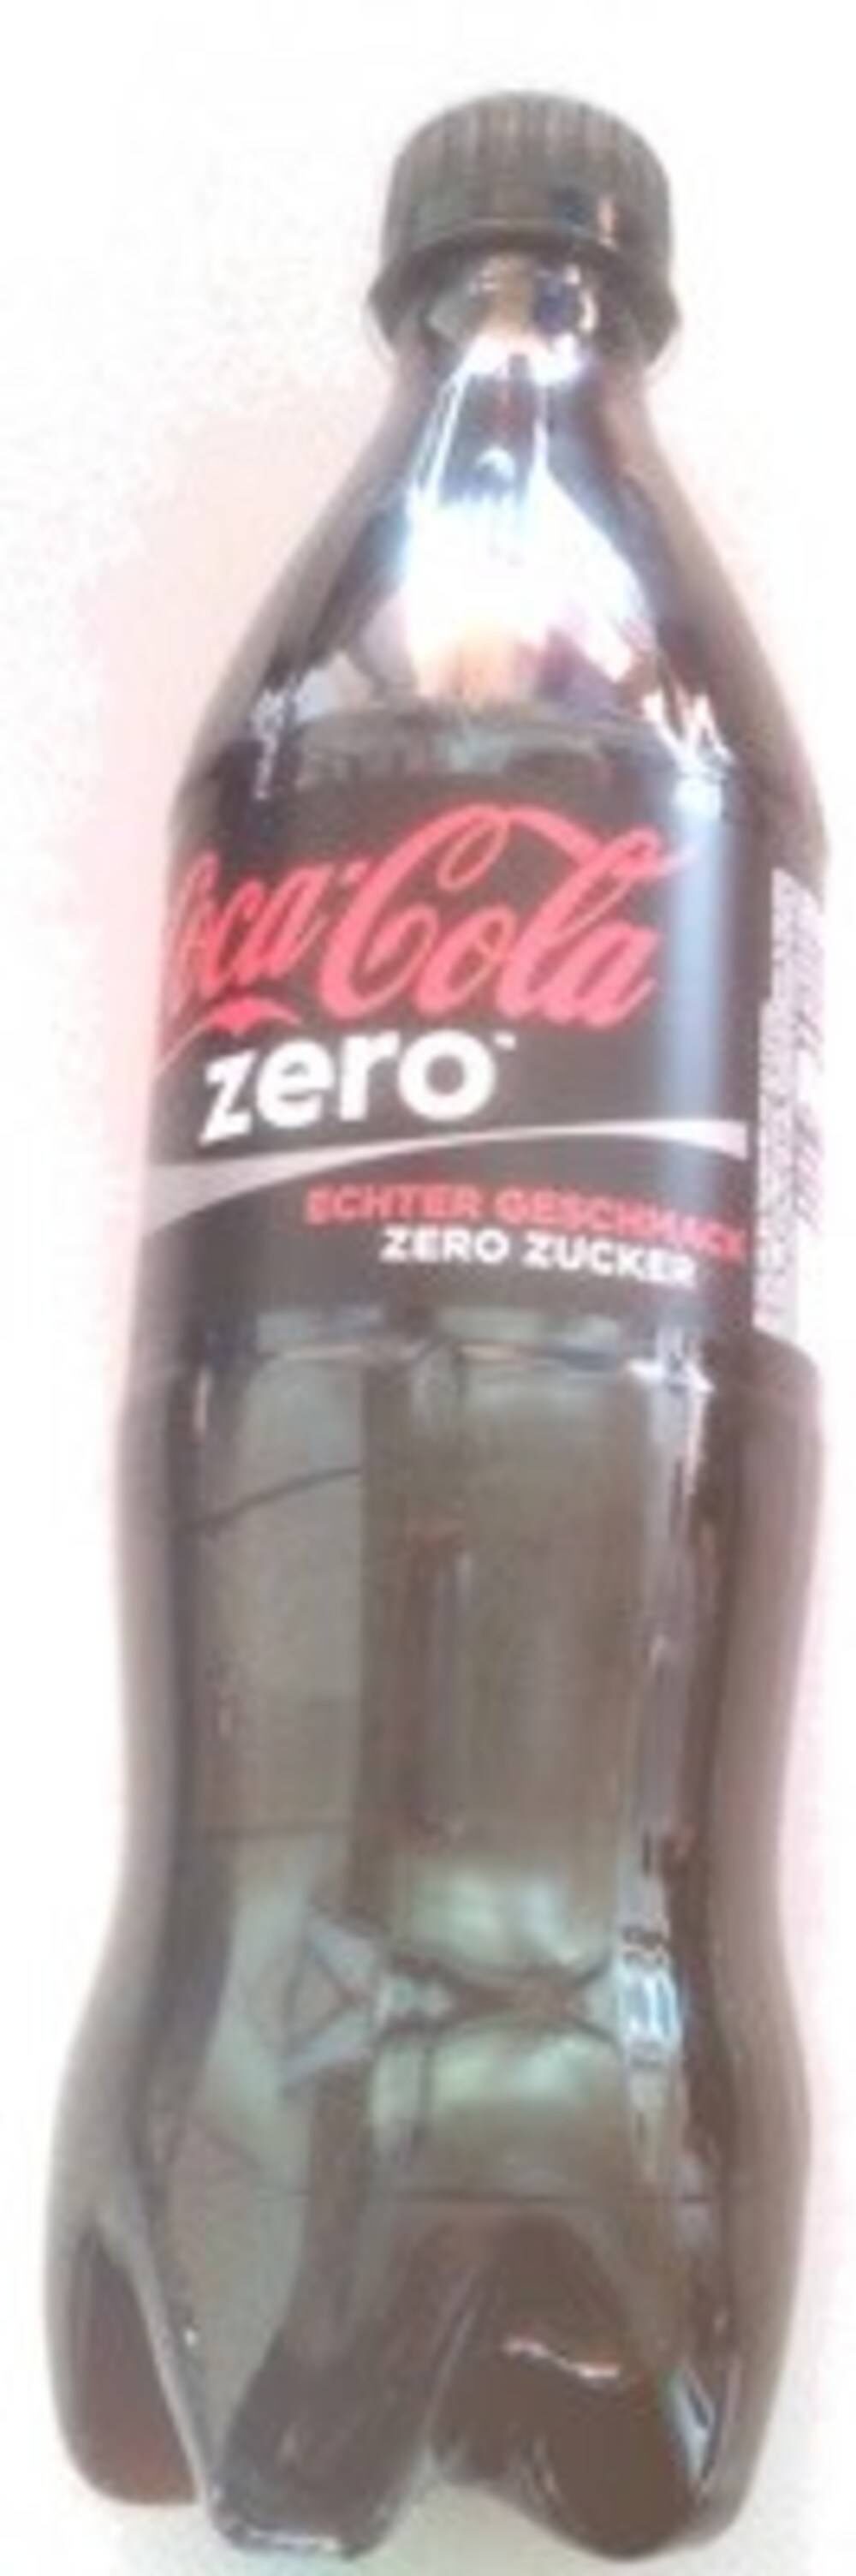 Coca Cola Zero 0.5 - Product